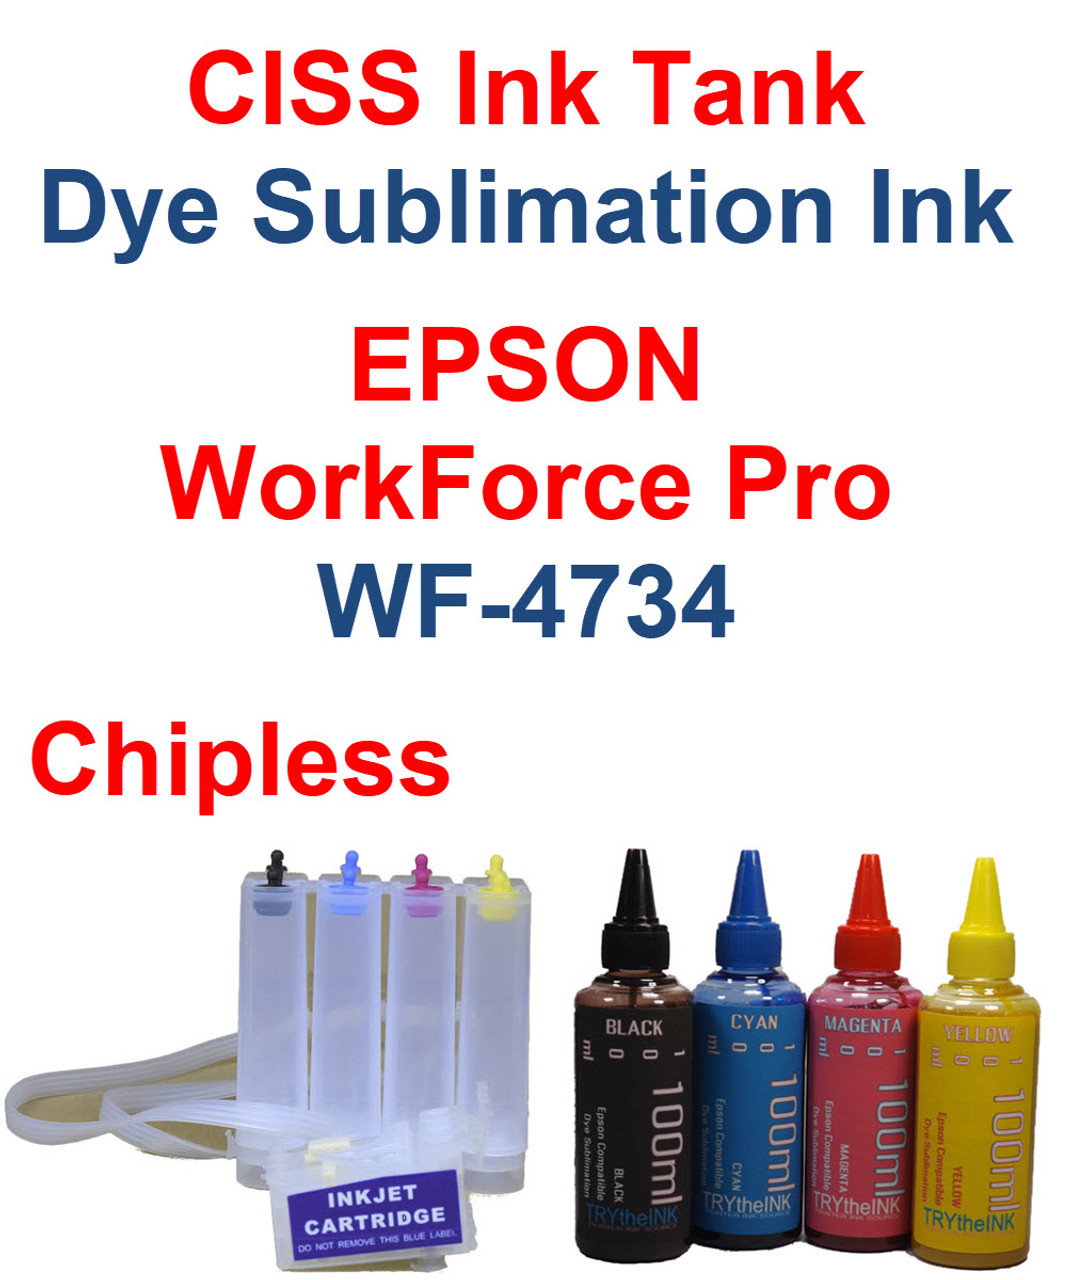 CISS Chipless Ink Tank 4 100ml Bottles Dye Sublimation Ink for Epson WorkForce Pro WF-4734 Printer